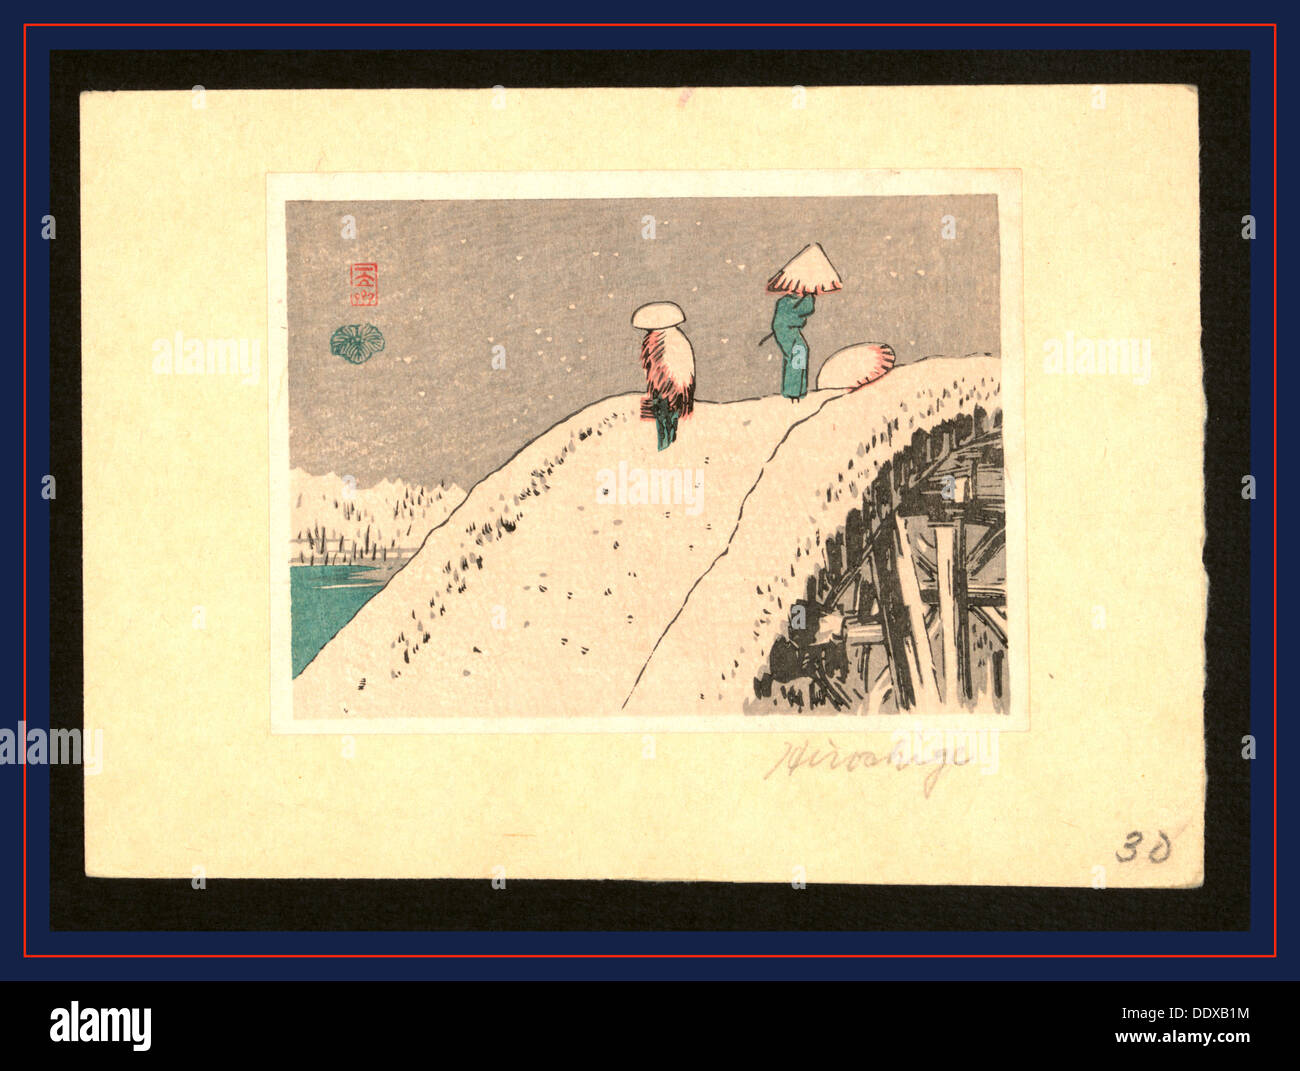 Fukeiga, Ando, Hiroshige, two people crossing a steep snow-covered bridge. Stock Photo